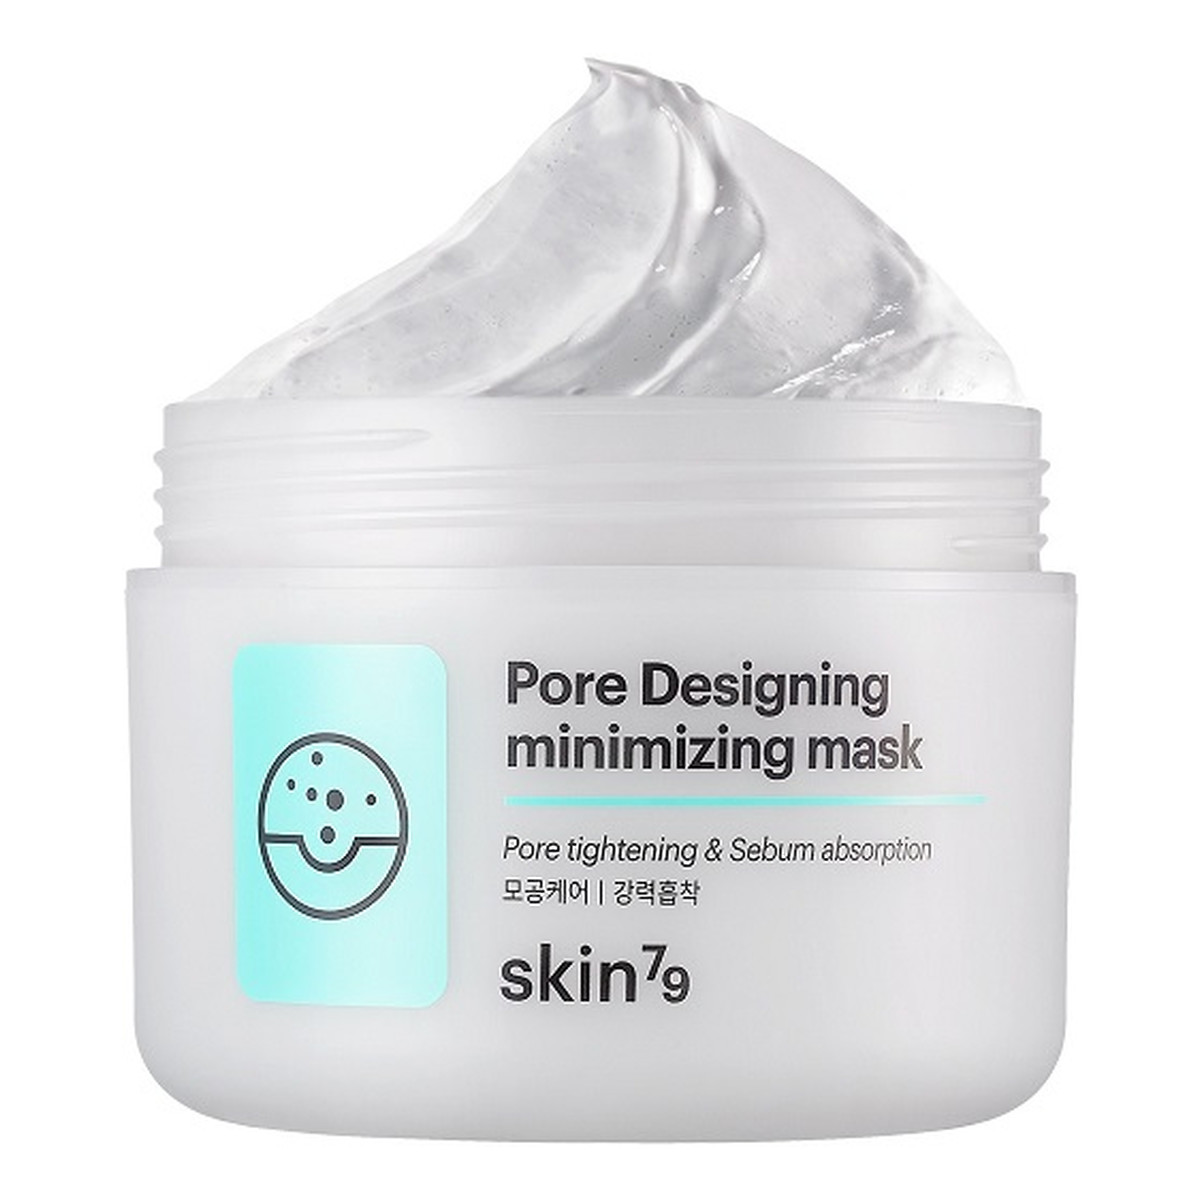 Skin79 Pore Desigining Minimizing Mask maseczka minimalizująca pory 100ml